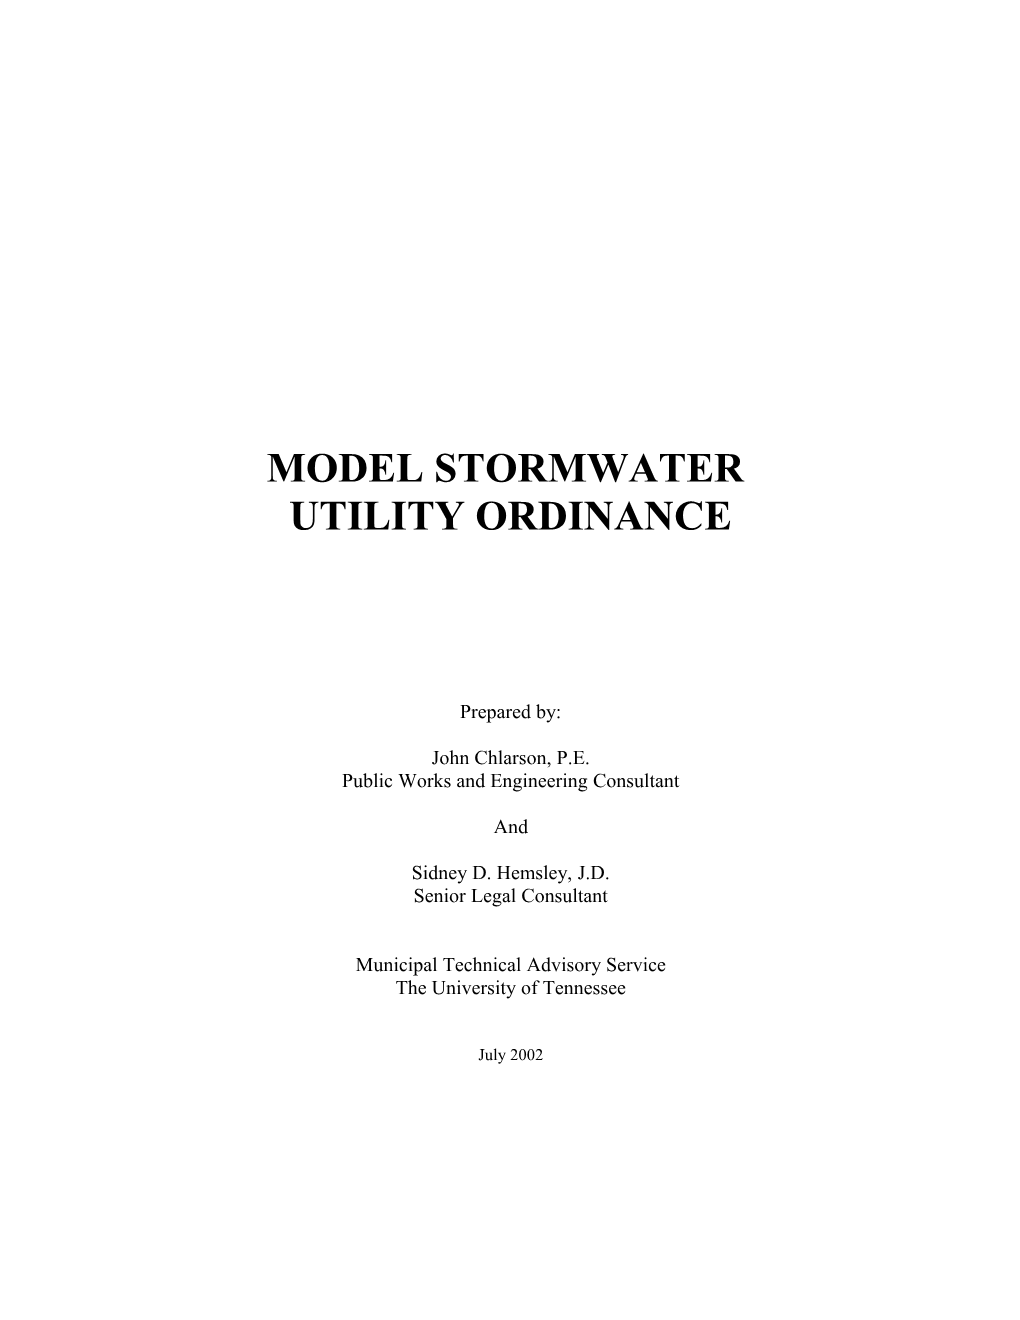 Model Stormwater Utility Ordinance